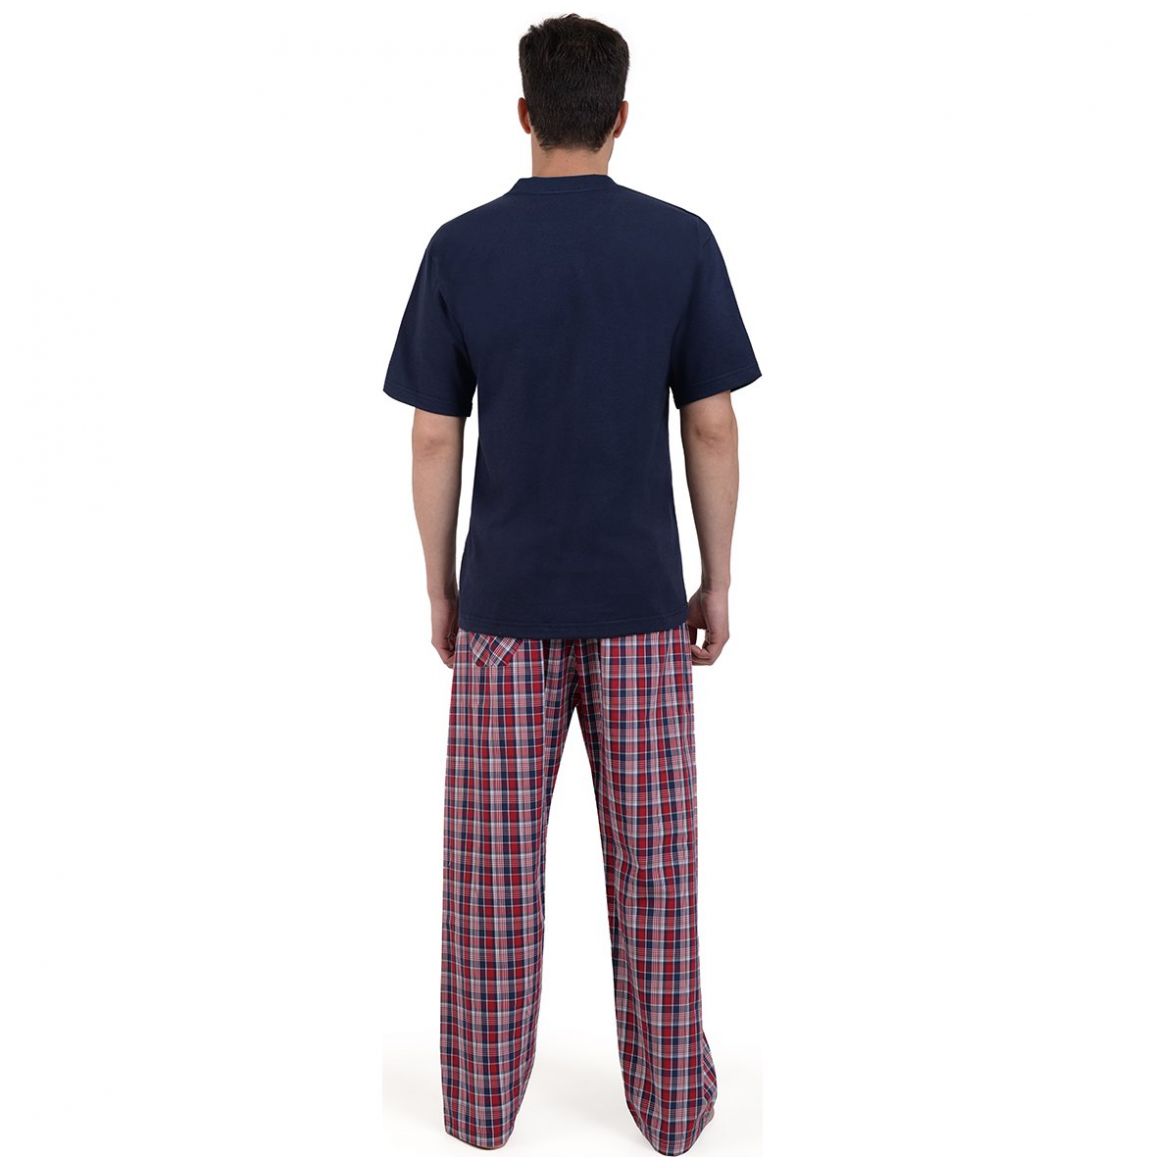 Pijama 3 Pack Bruno Magnani para Hombre